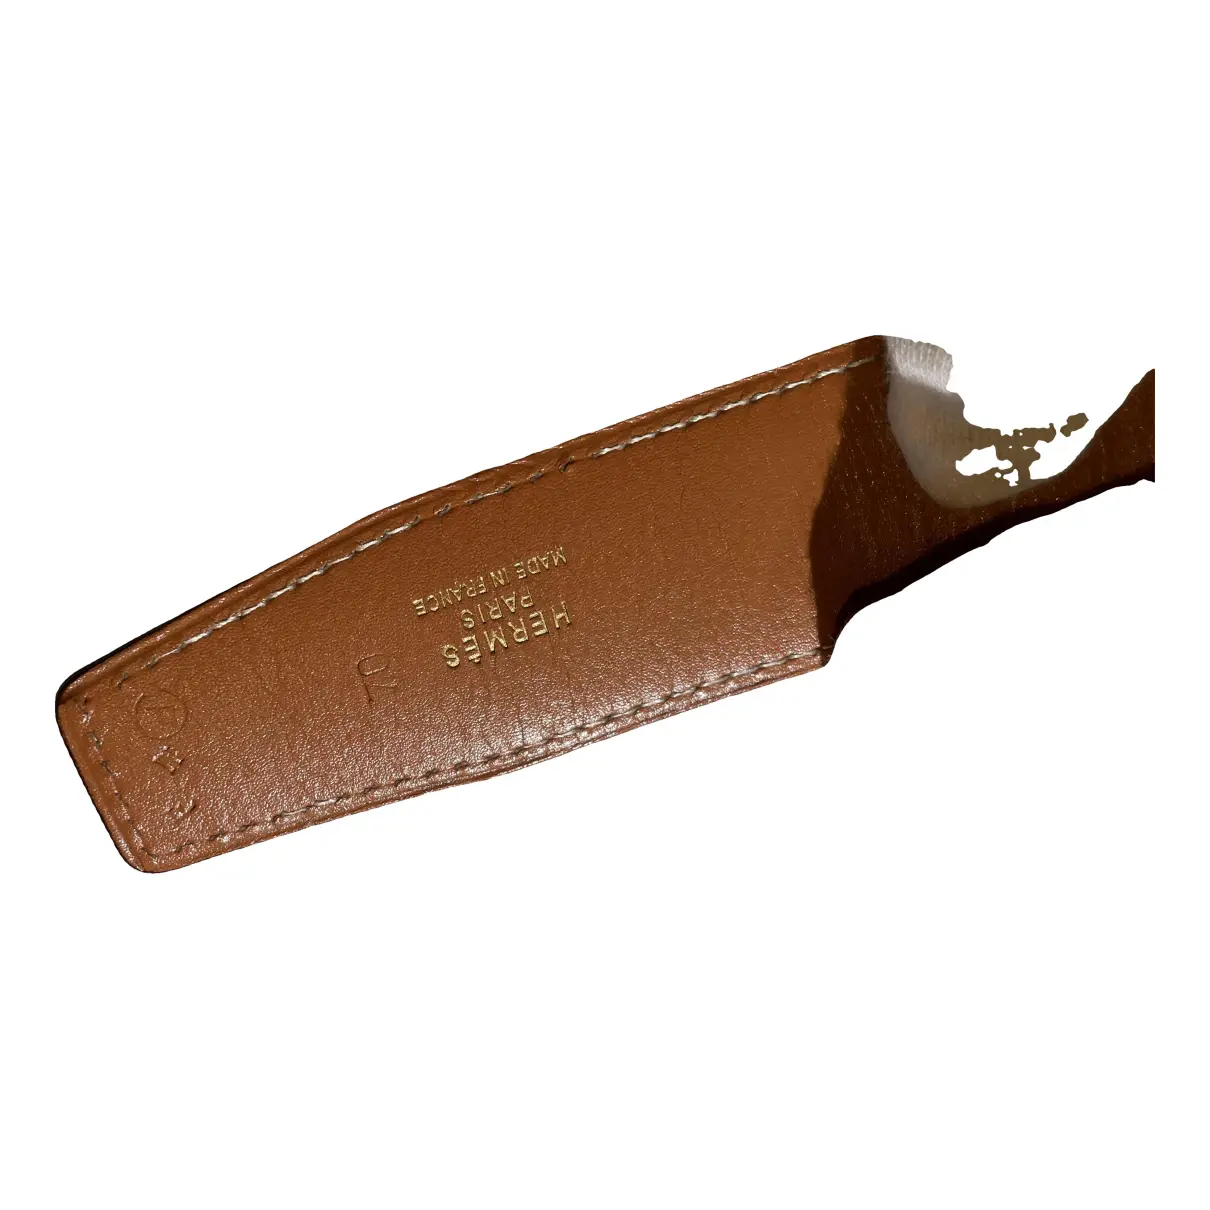 Buy Hermès Cuir seul / Leather Strap leather belt online